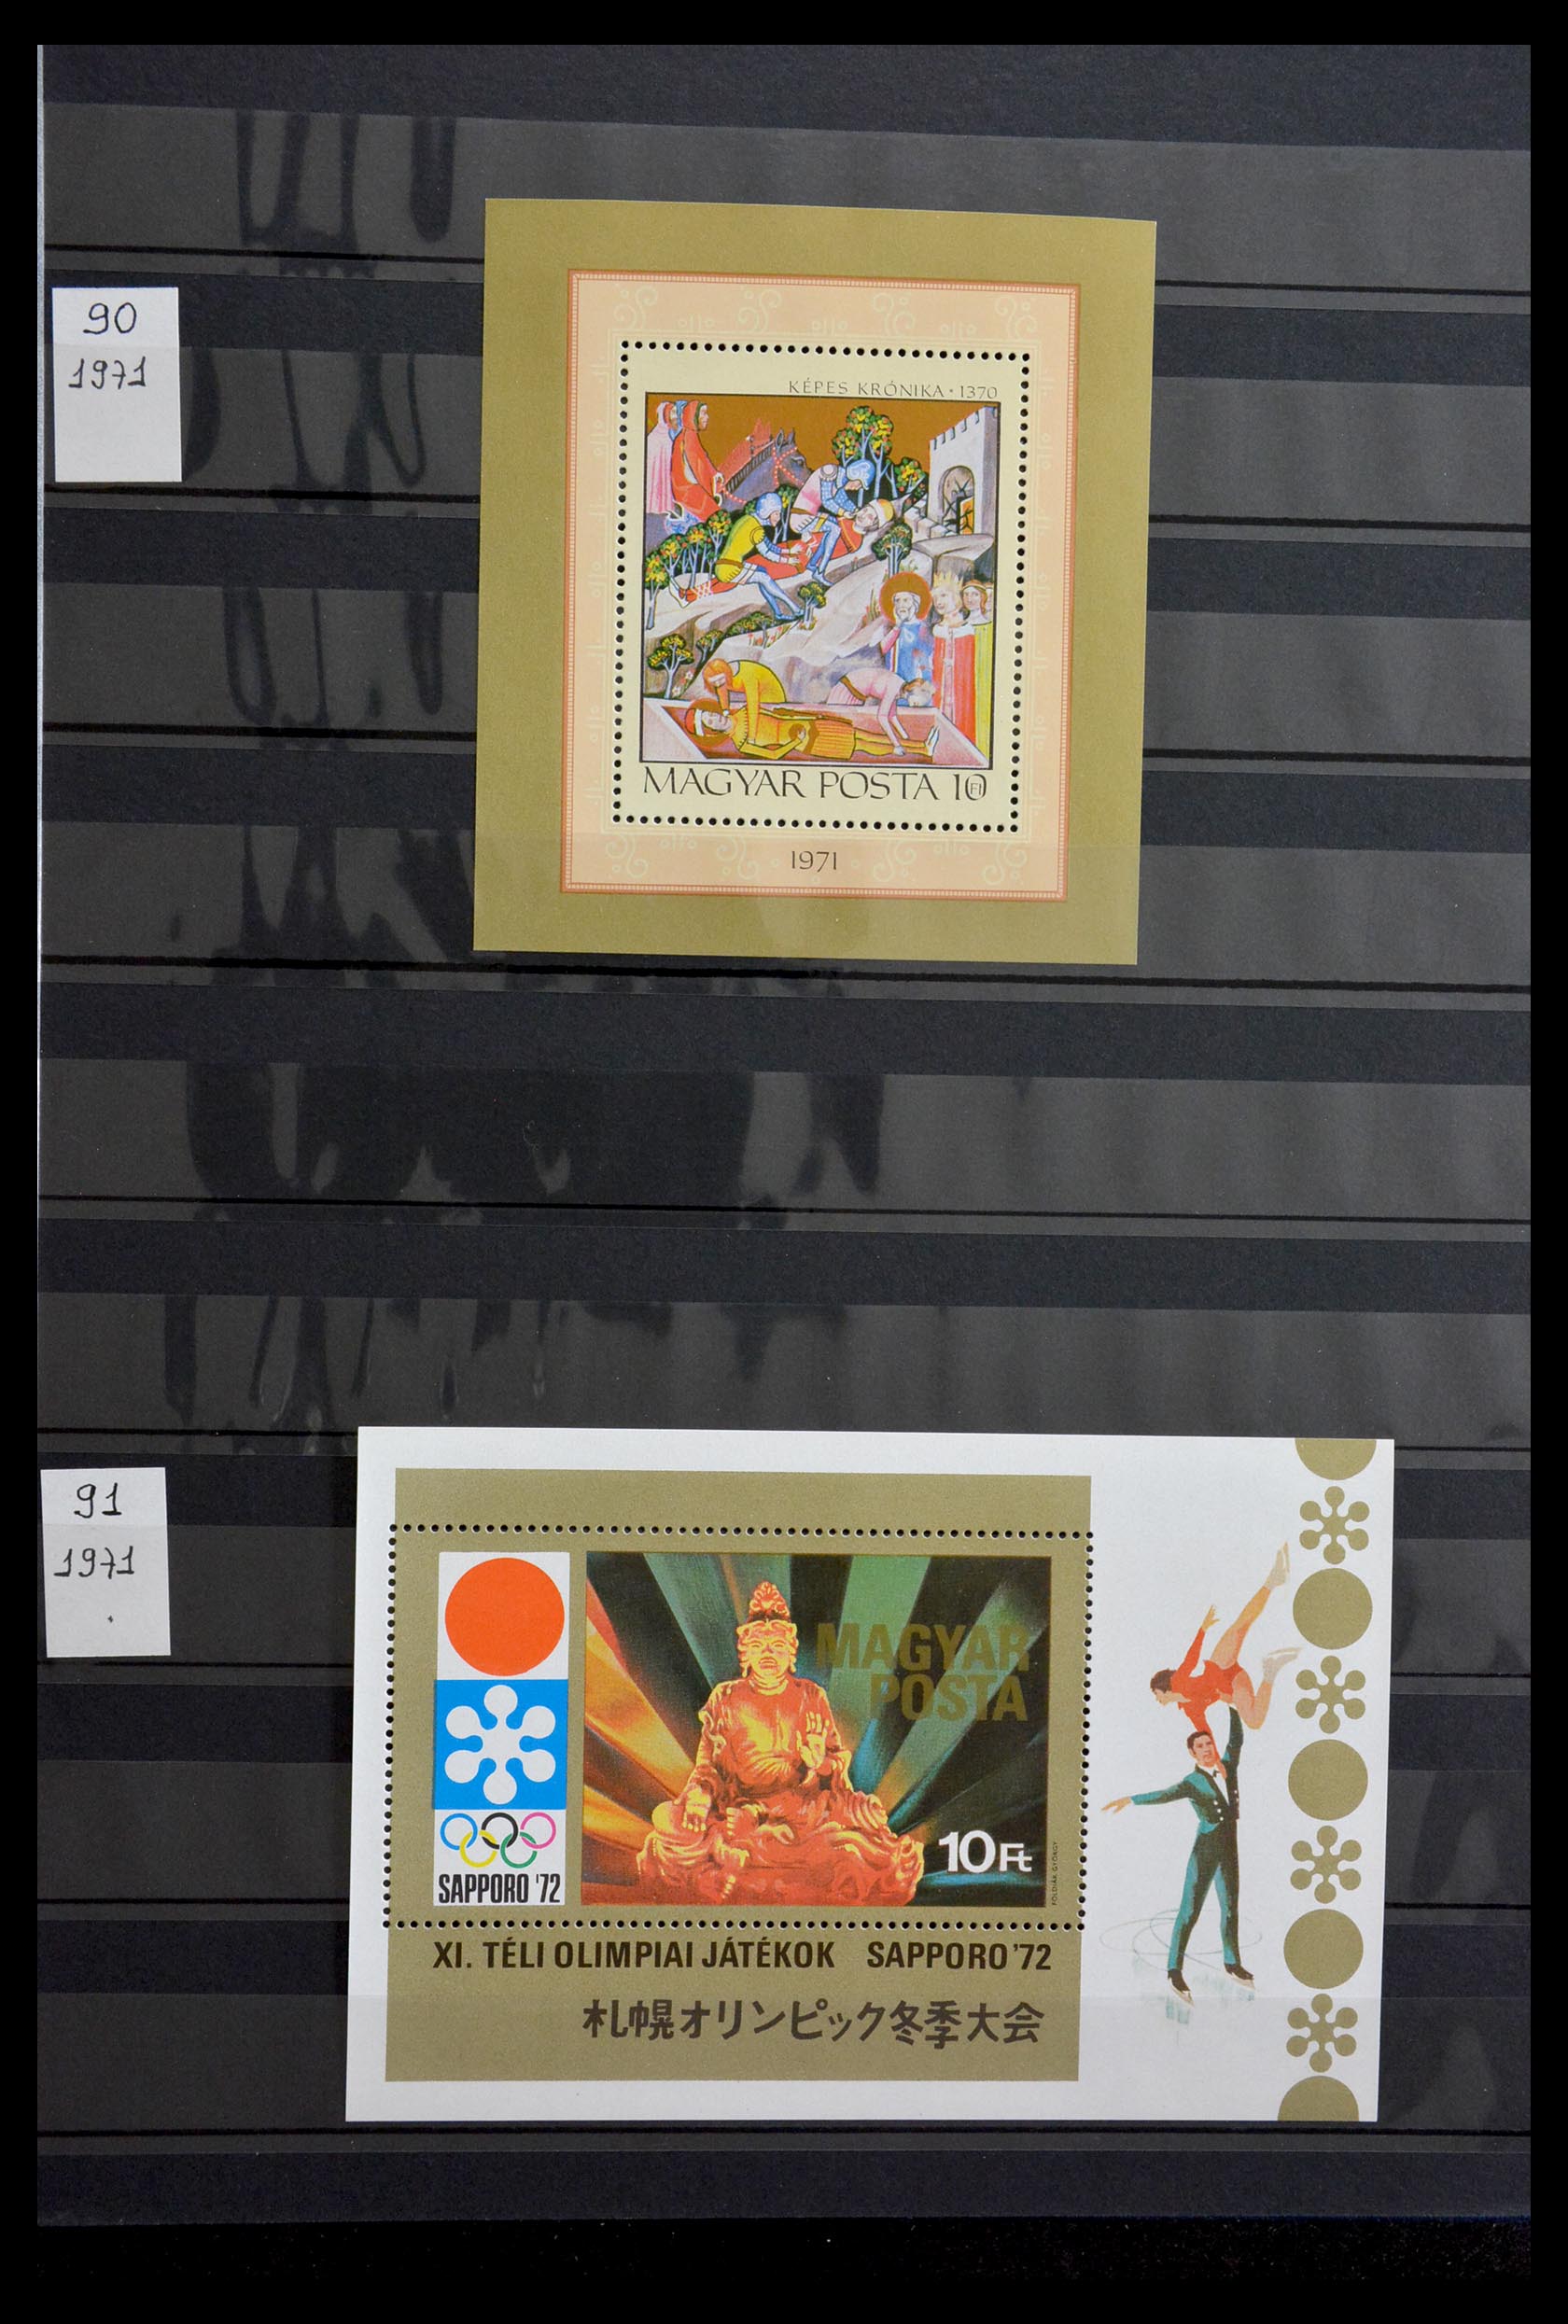 29283 038 - 29283 Hungary souvenir sheets 1938-1984.